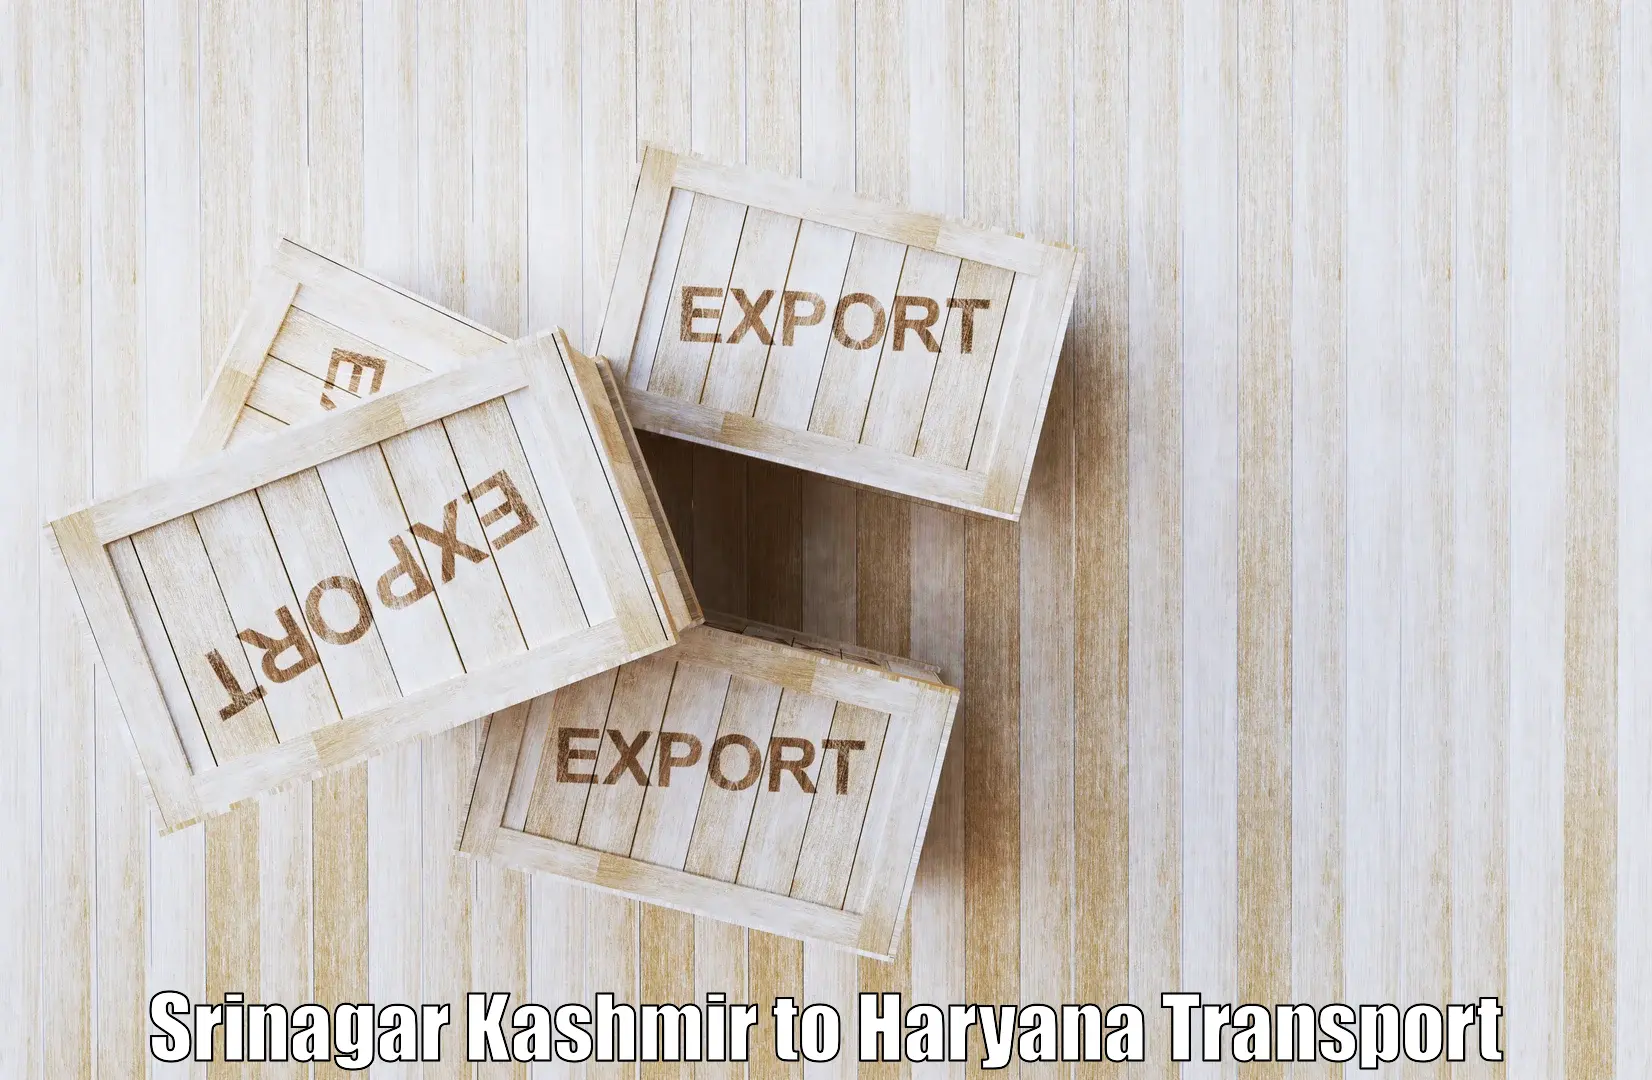 Furniture transport service Srinagar Kashmir to Loharu